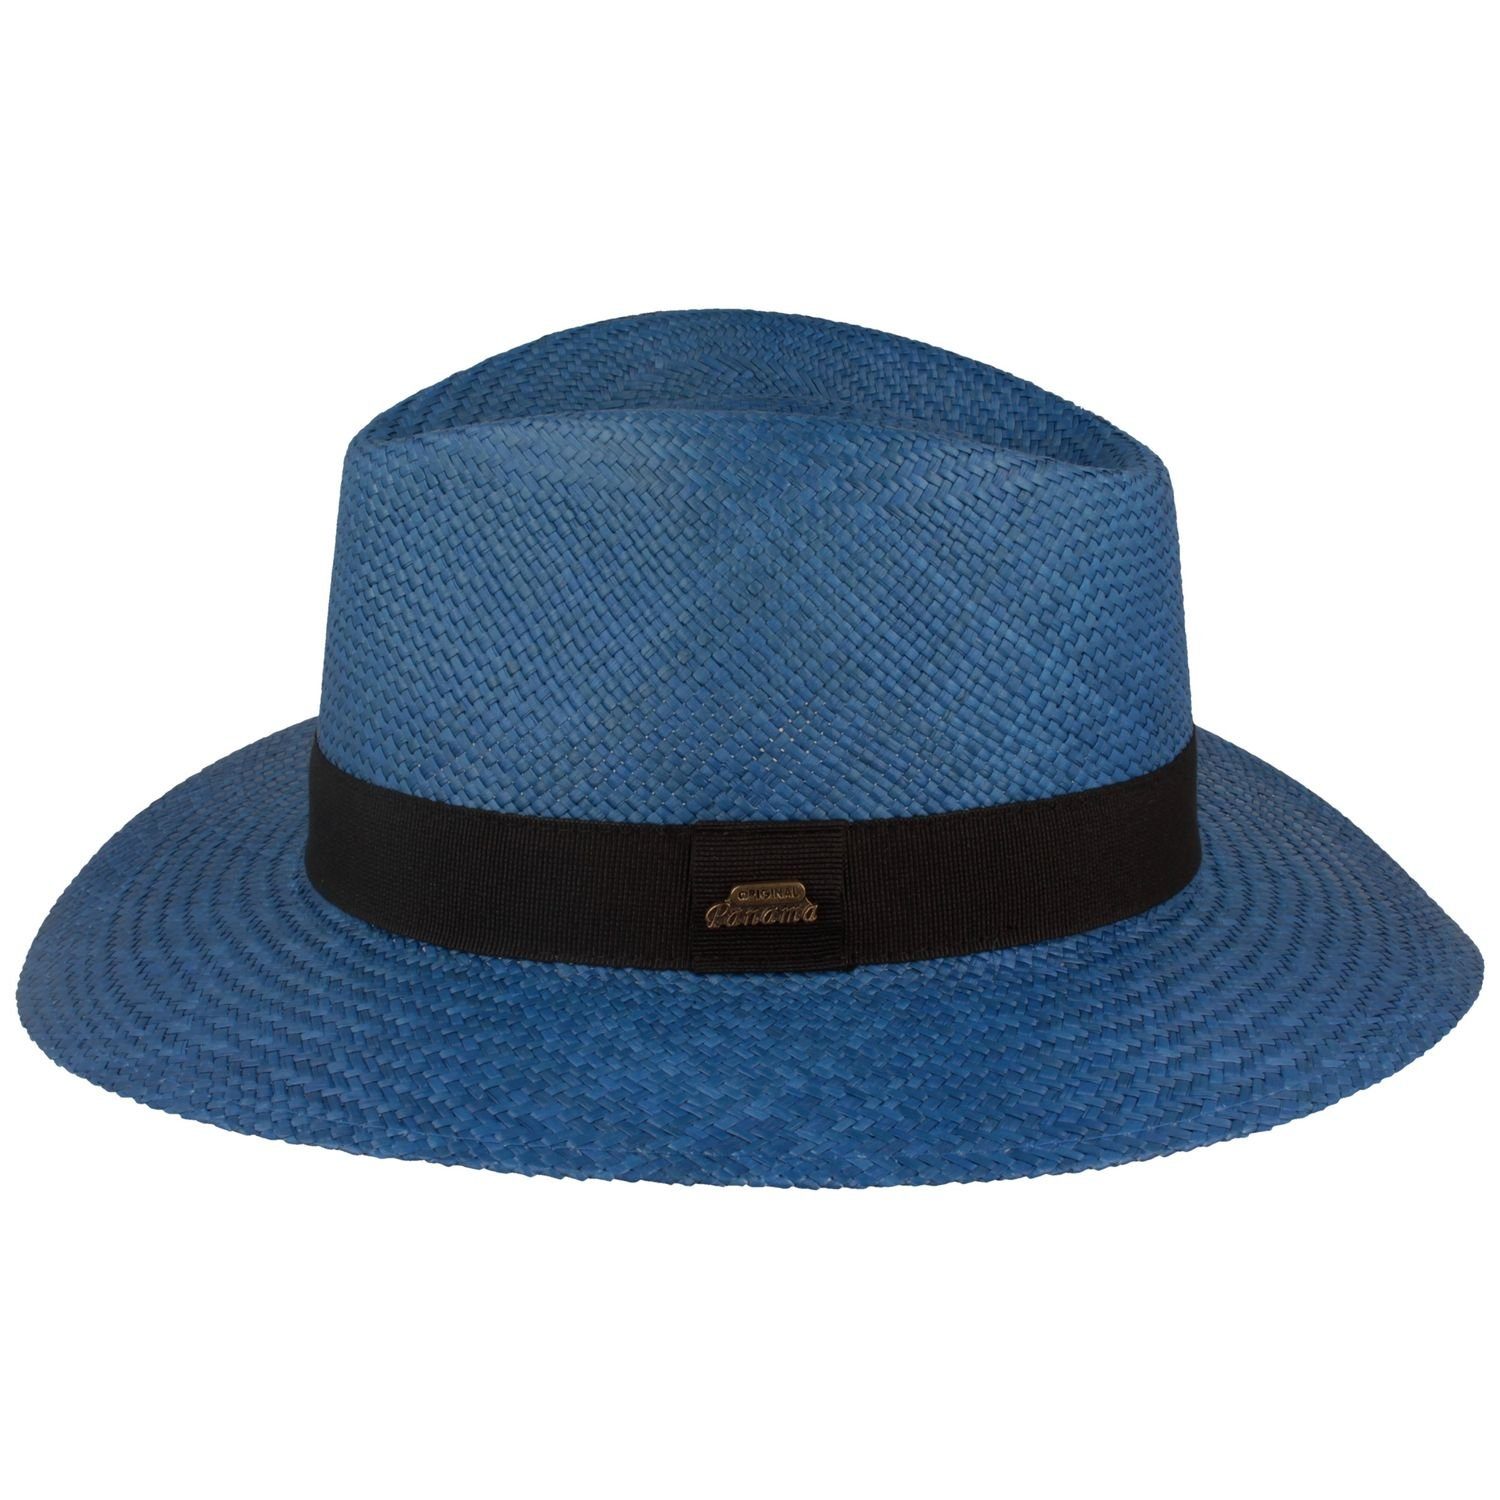 Breiter Strohhut Eleganter original Panama Hut 50+ UV-Schutz blau